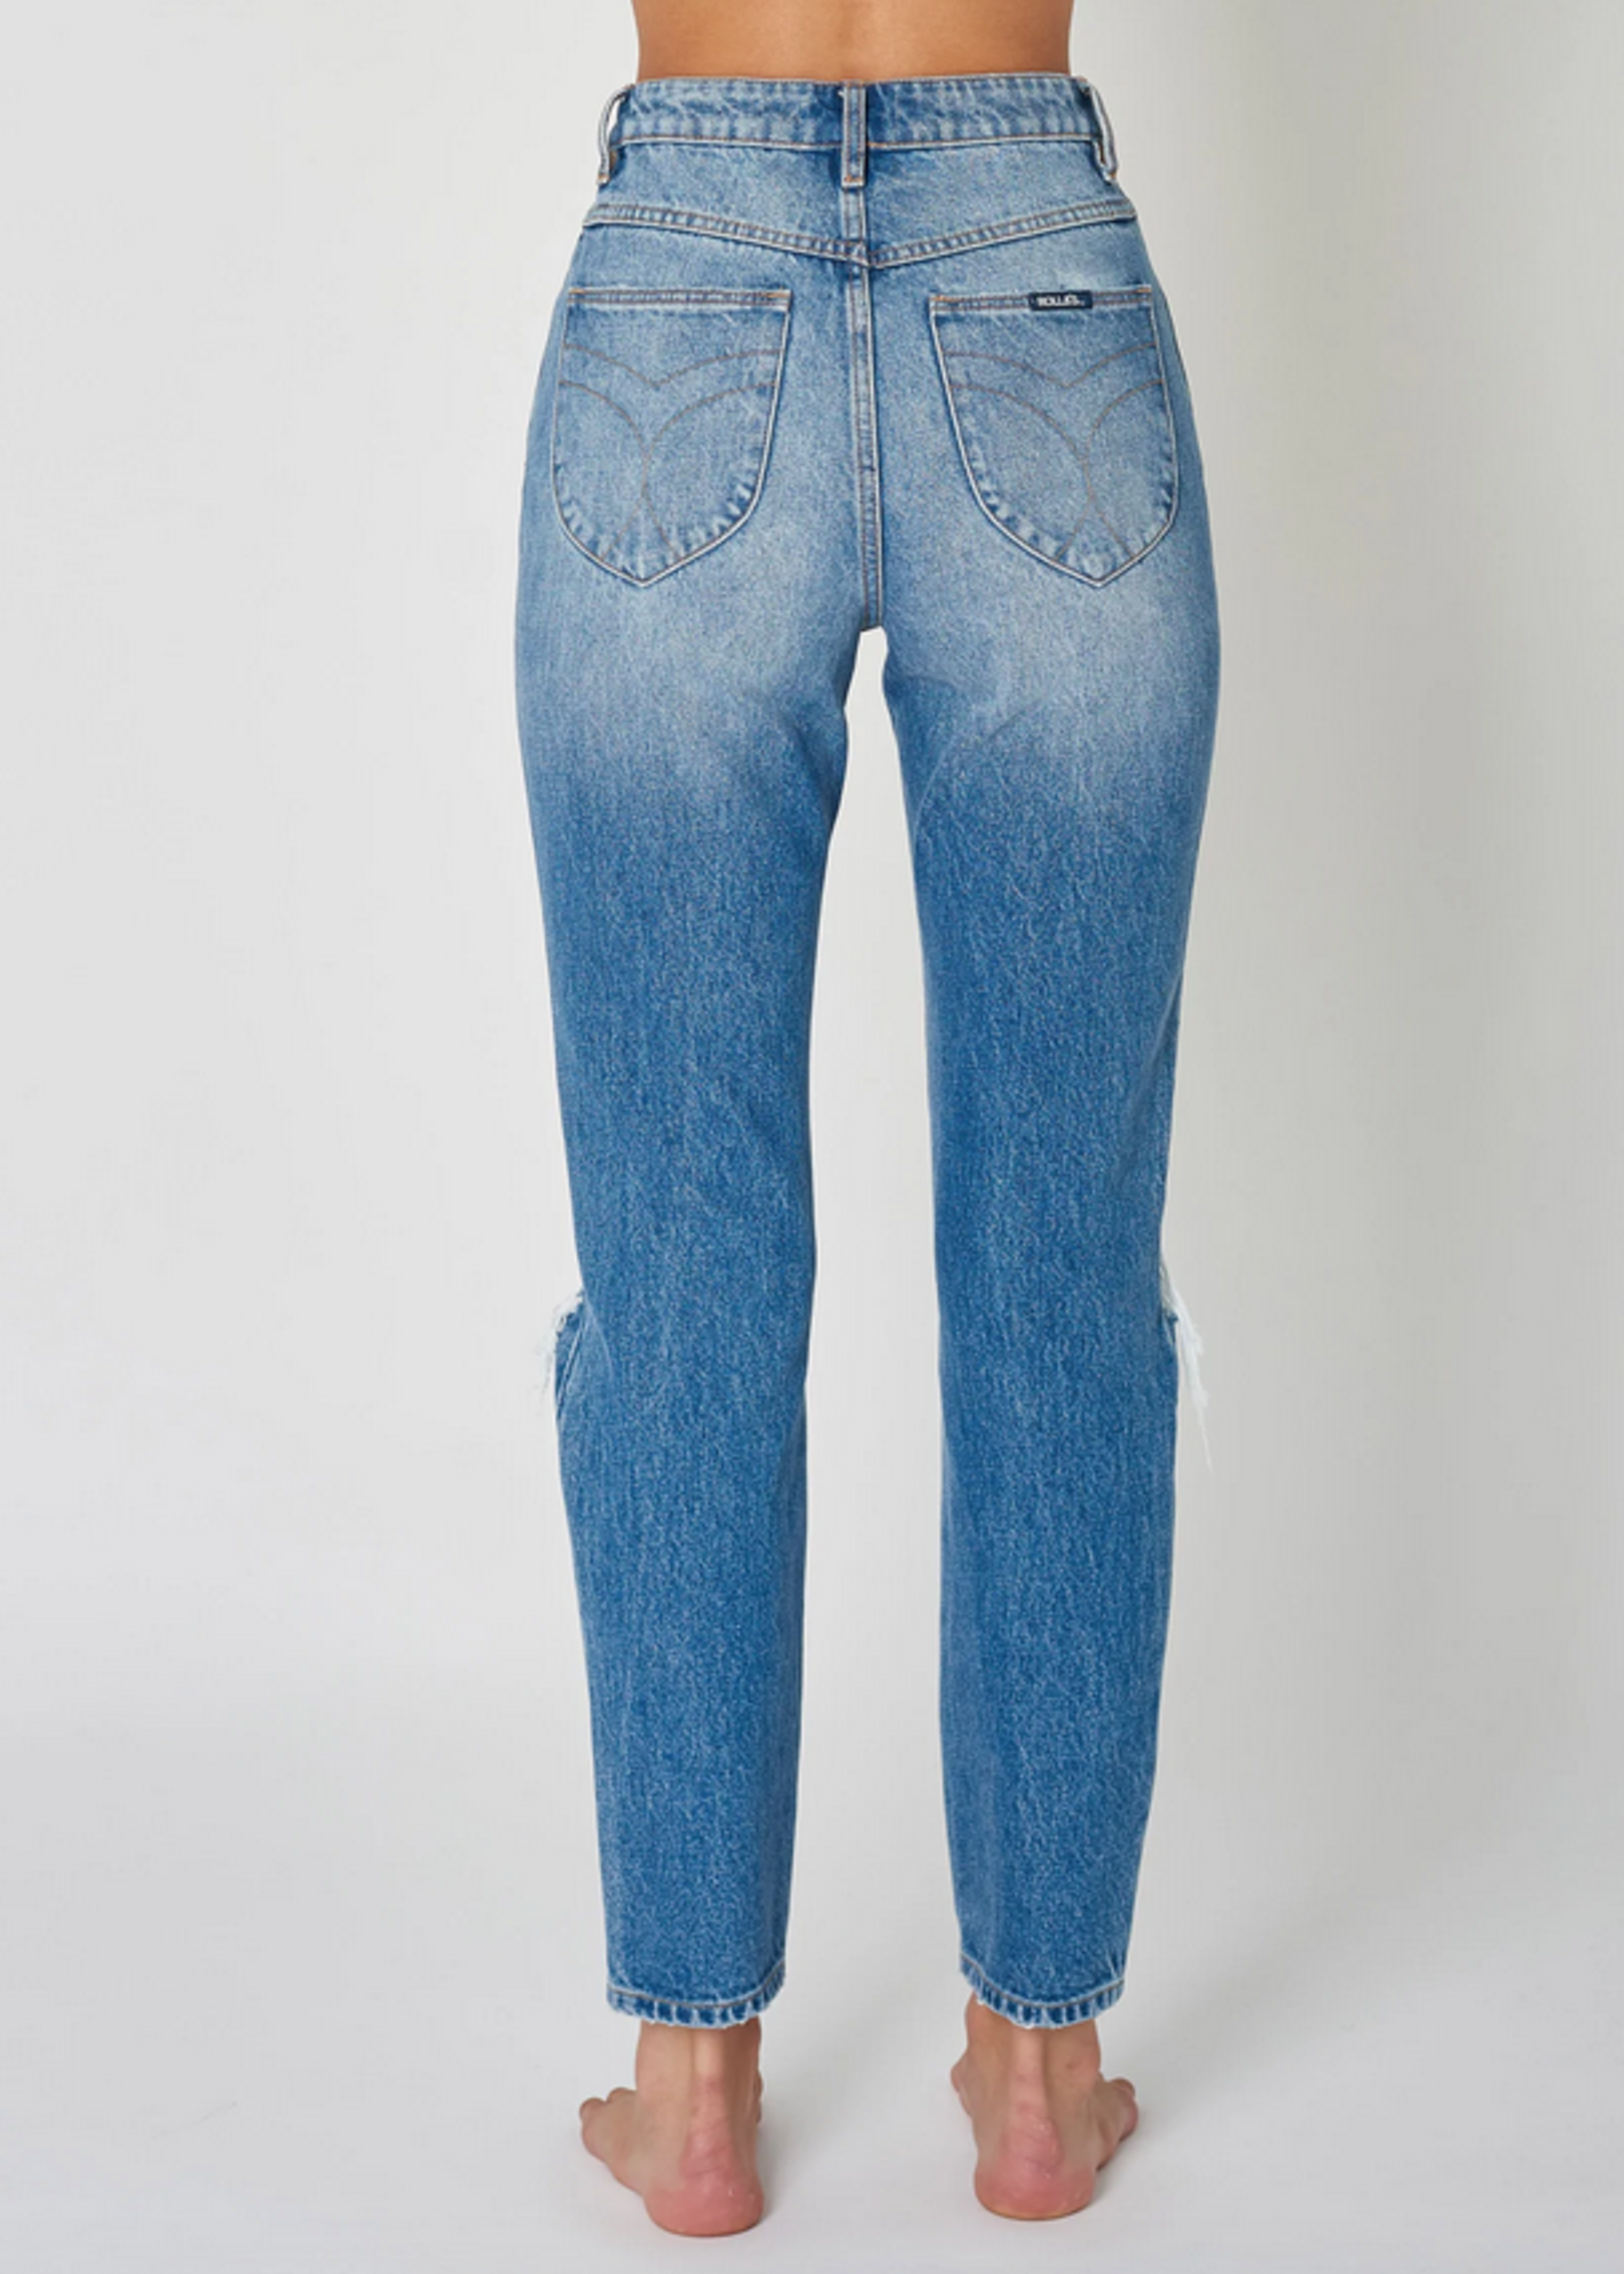 rollas rollas dusters worn vintage blue jeans